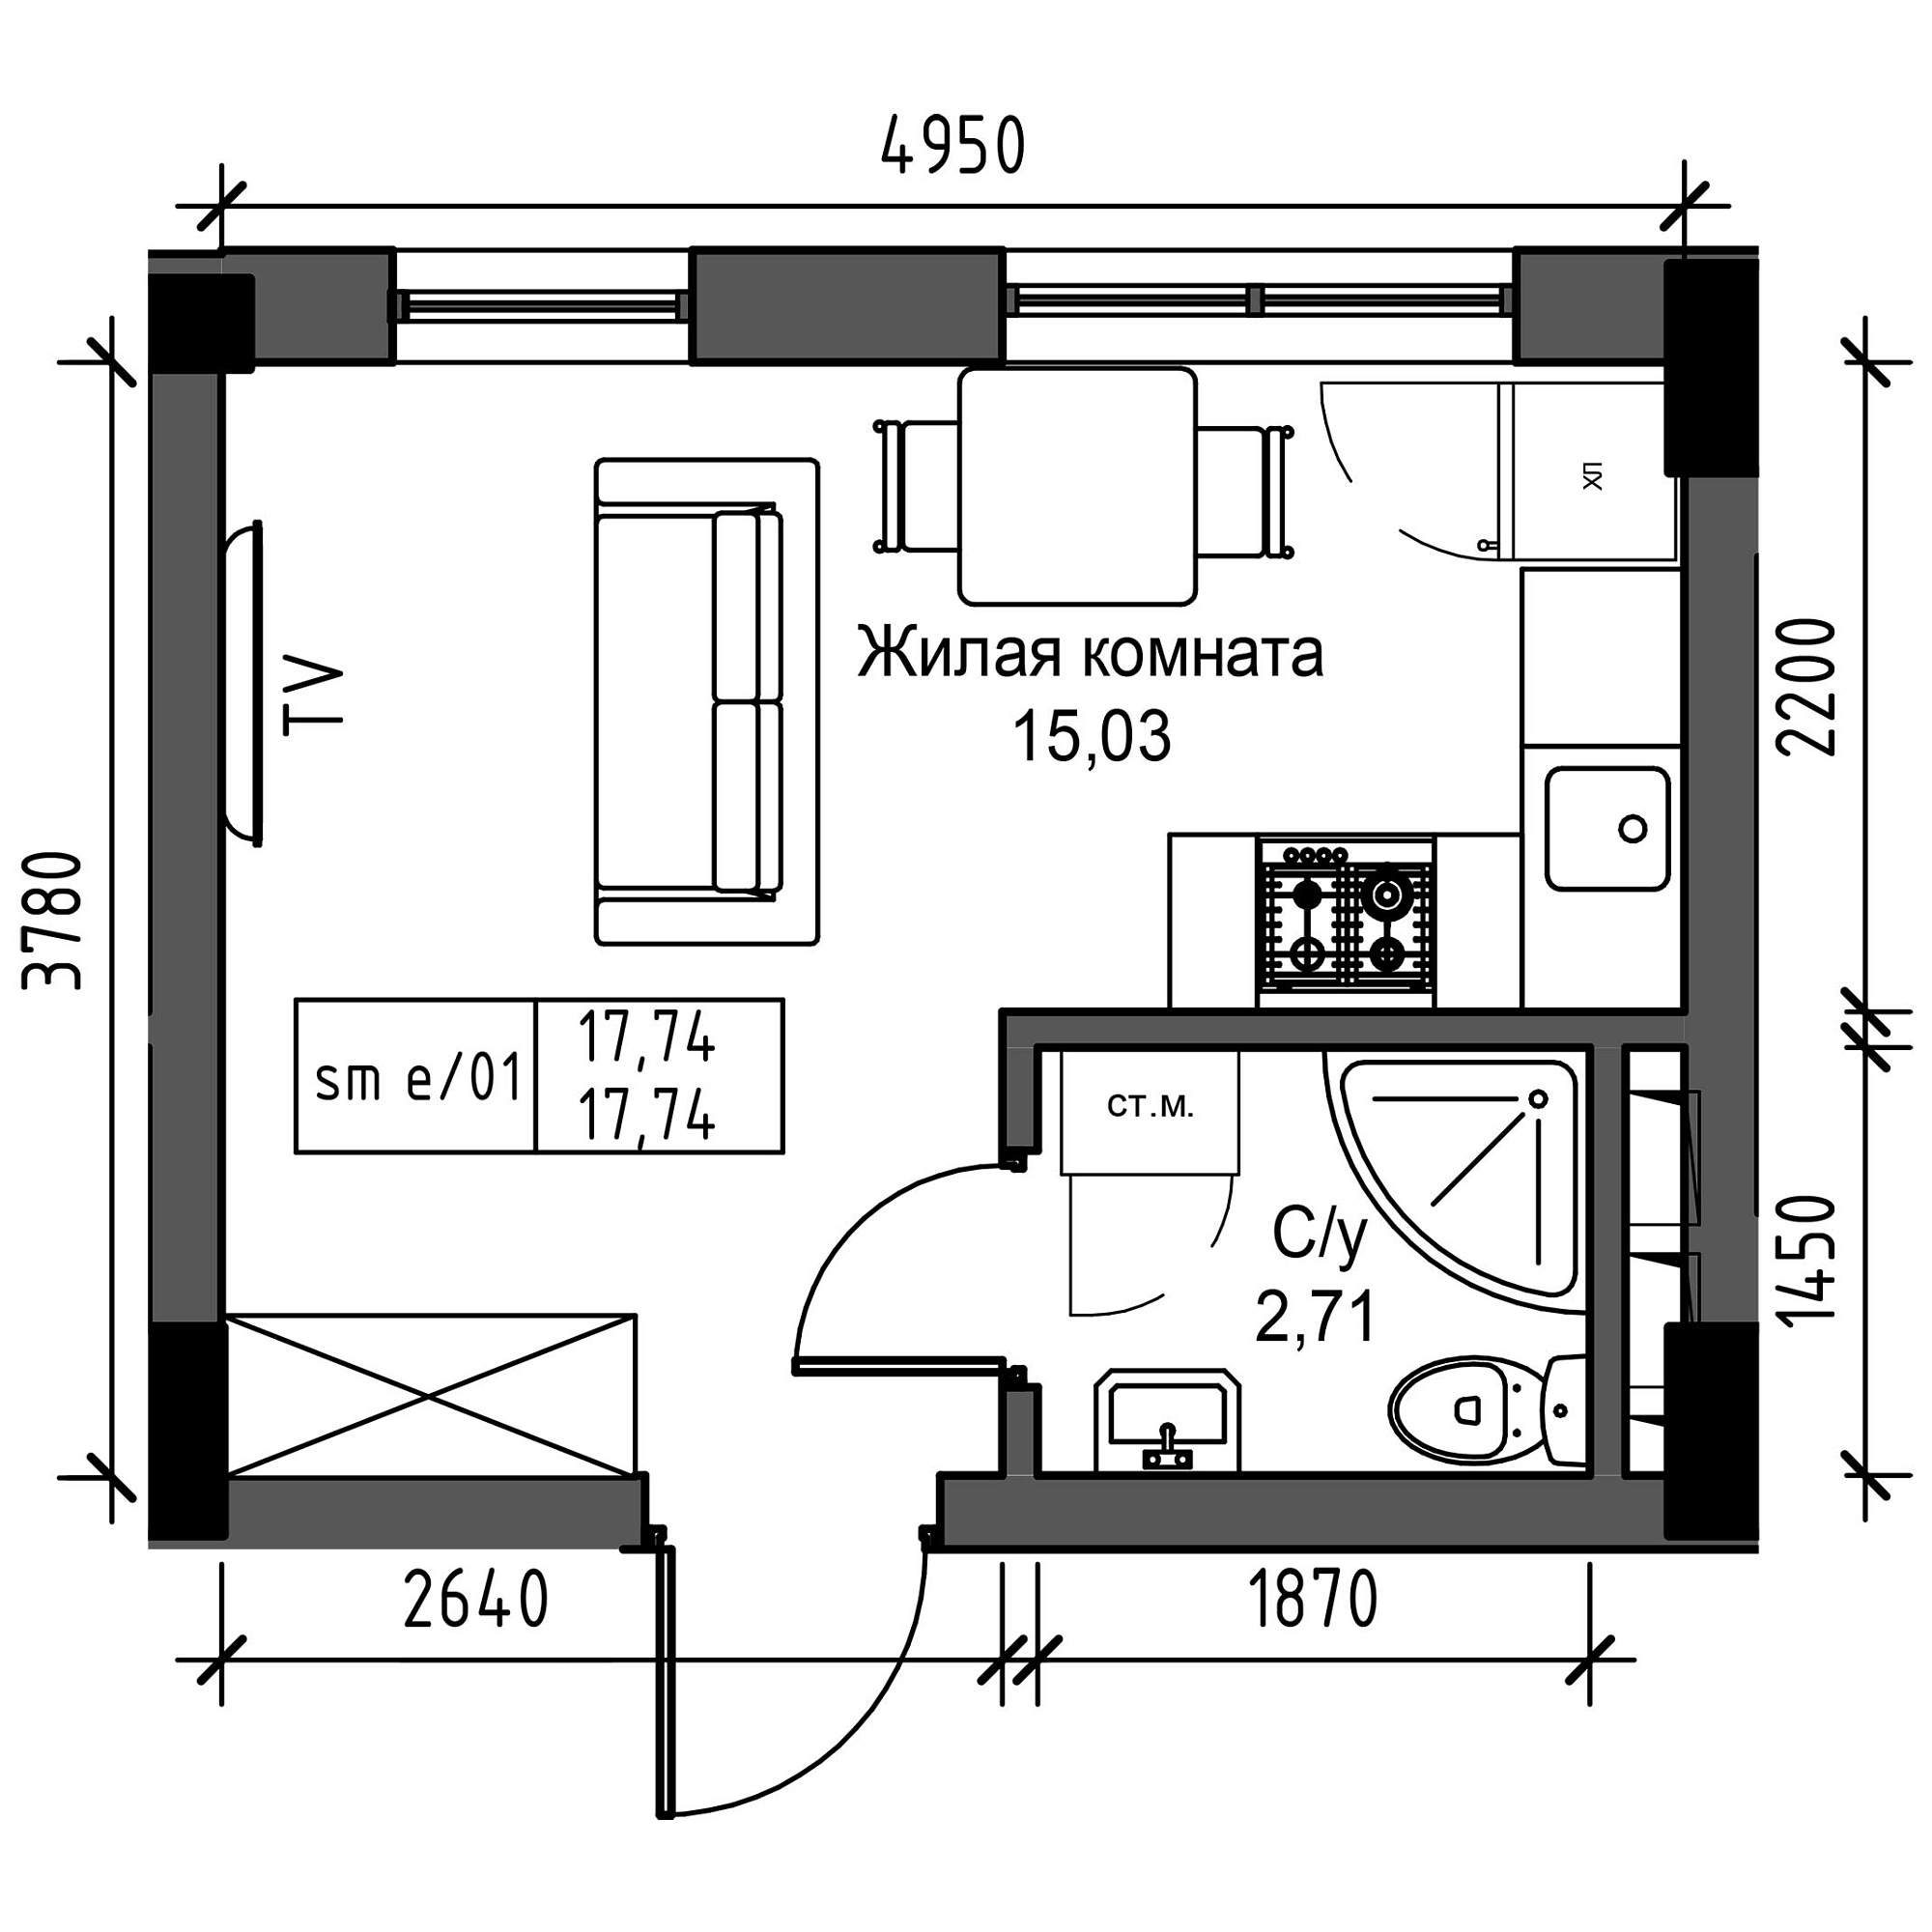 Планування Smart-квартира площею 17.74м2, UM-003-05/0048.